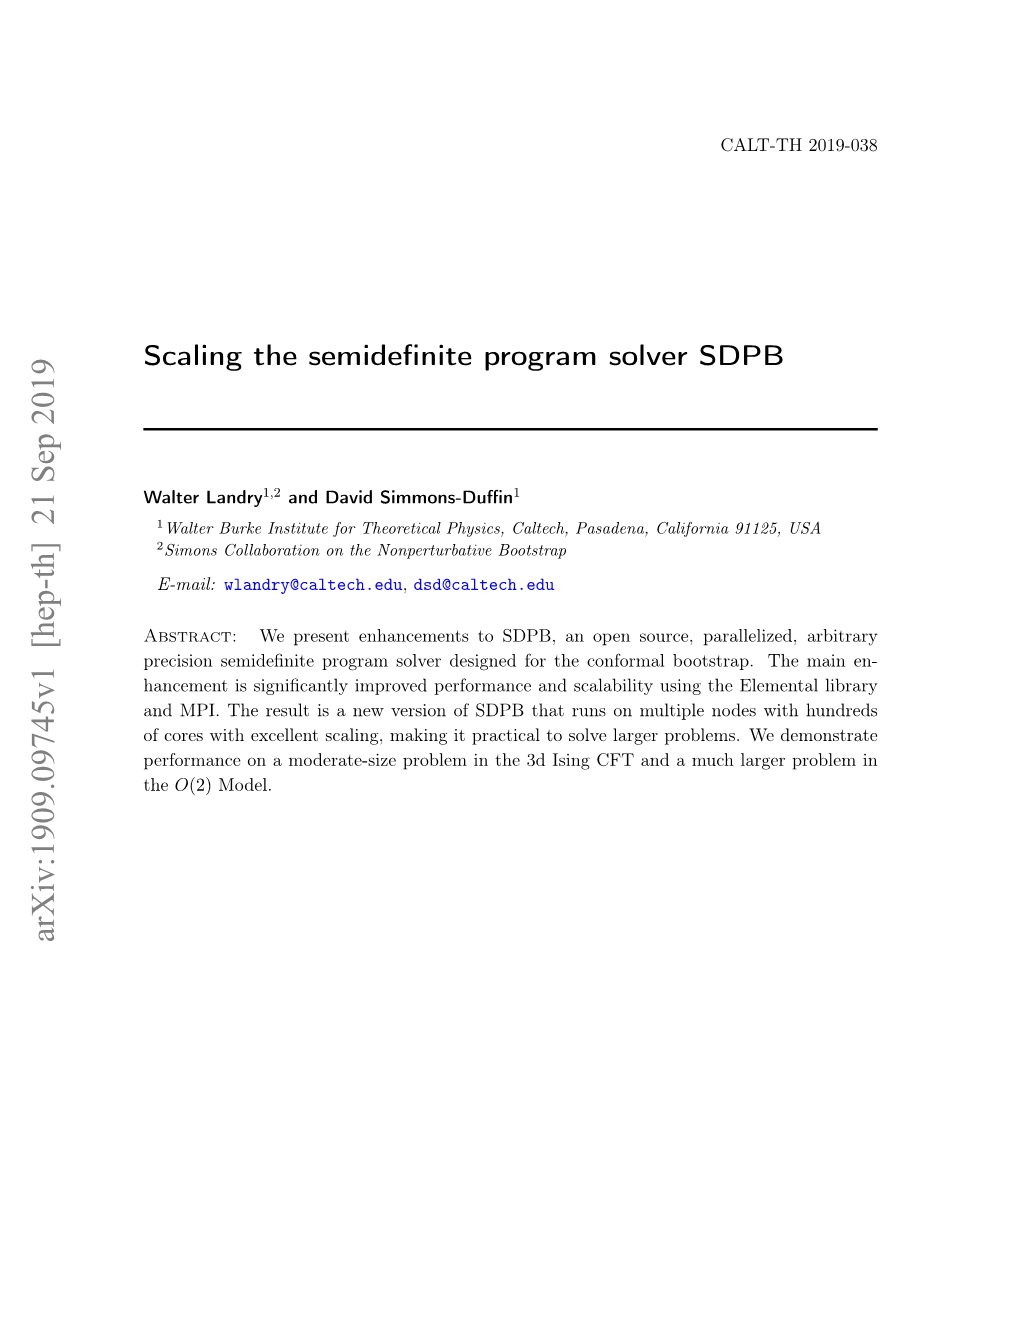 Scaling the Semidefinite Program Solver SDPB